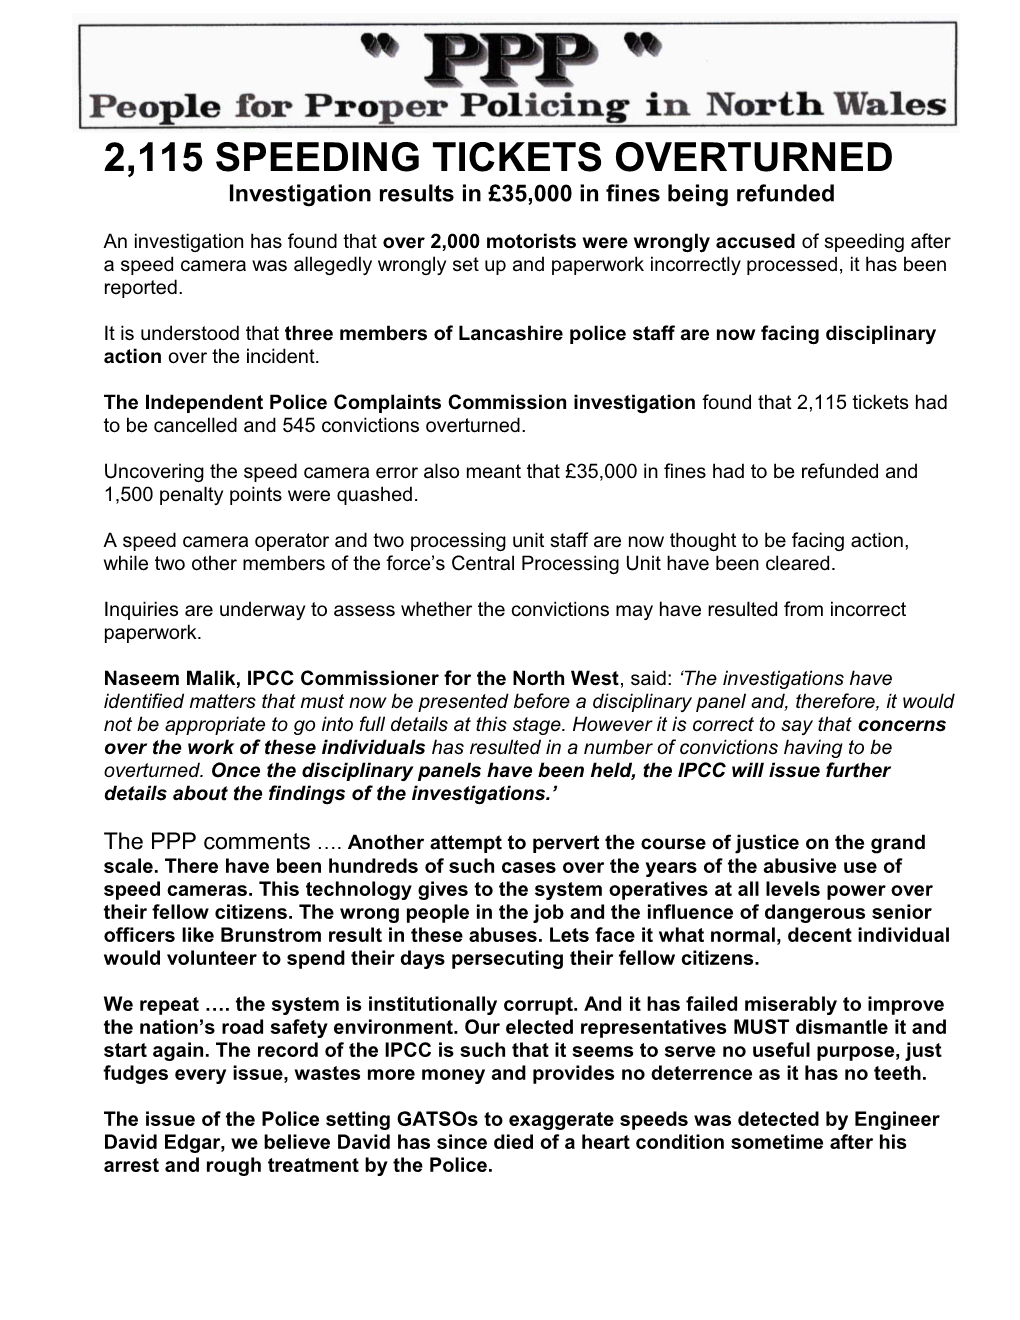 2,115 Speeding Tickets Overturned